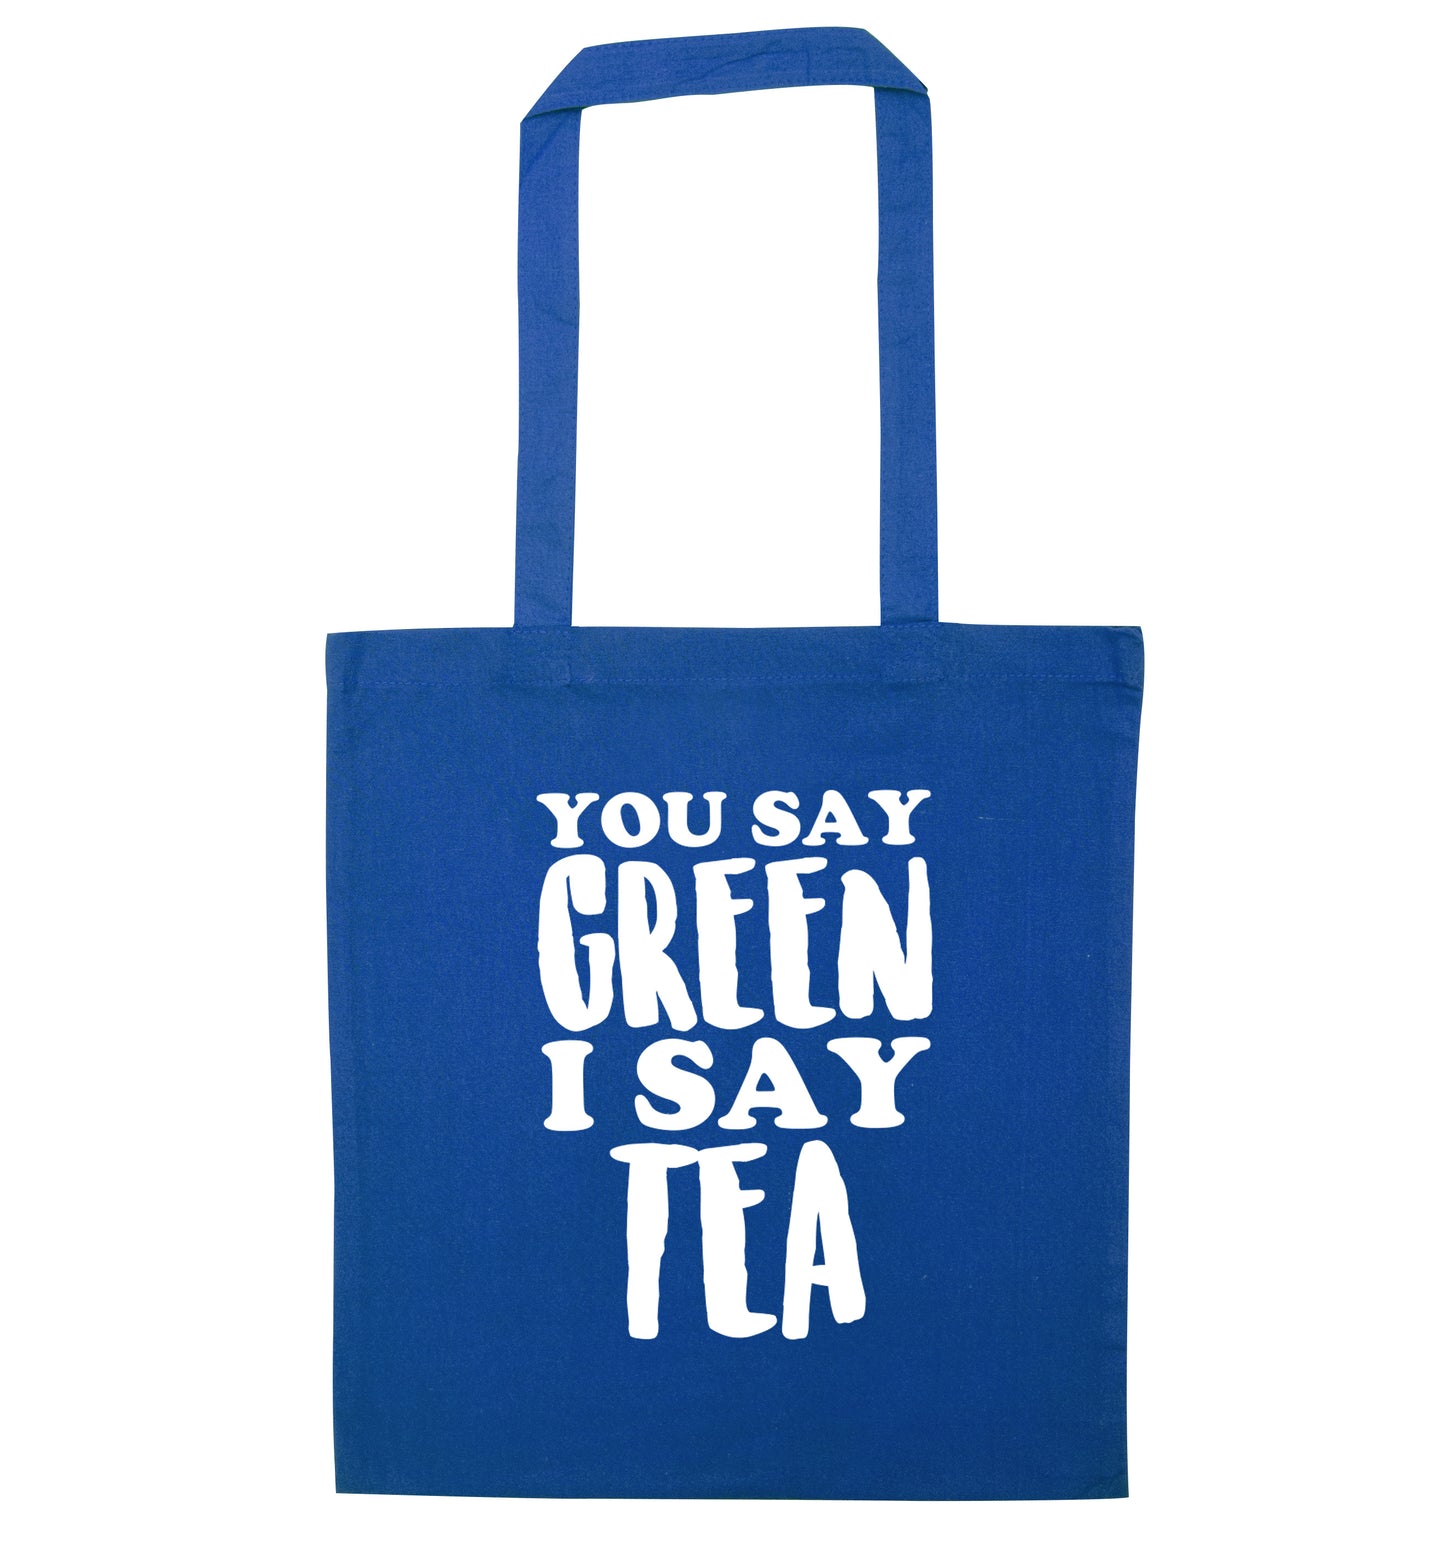 You say green I say tea! blue tote bag